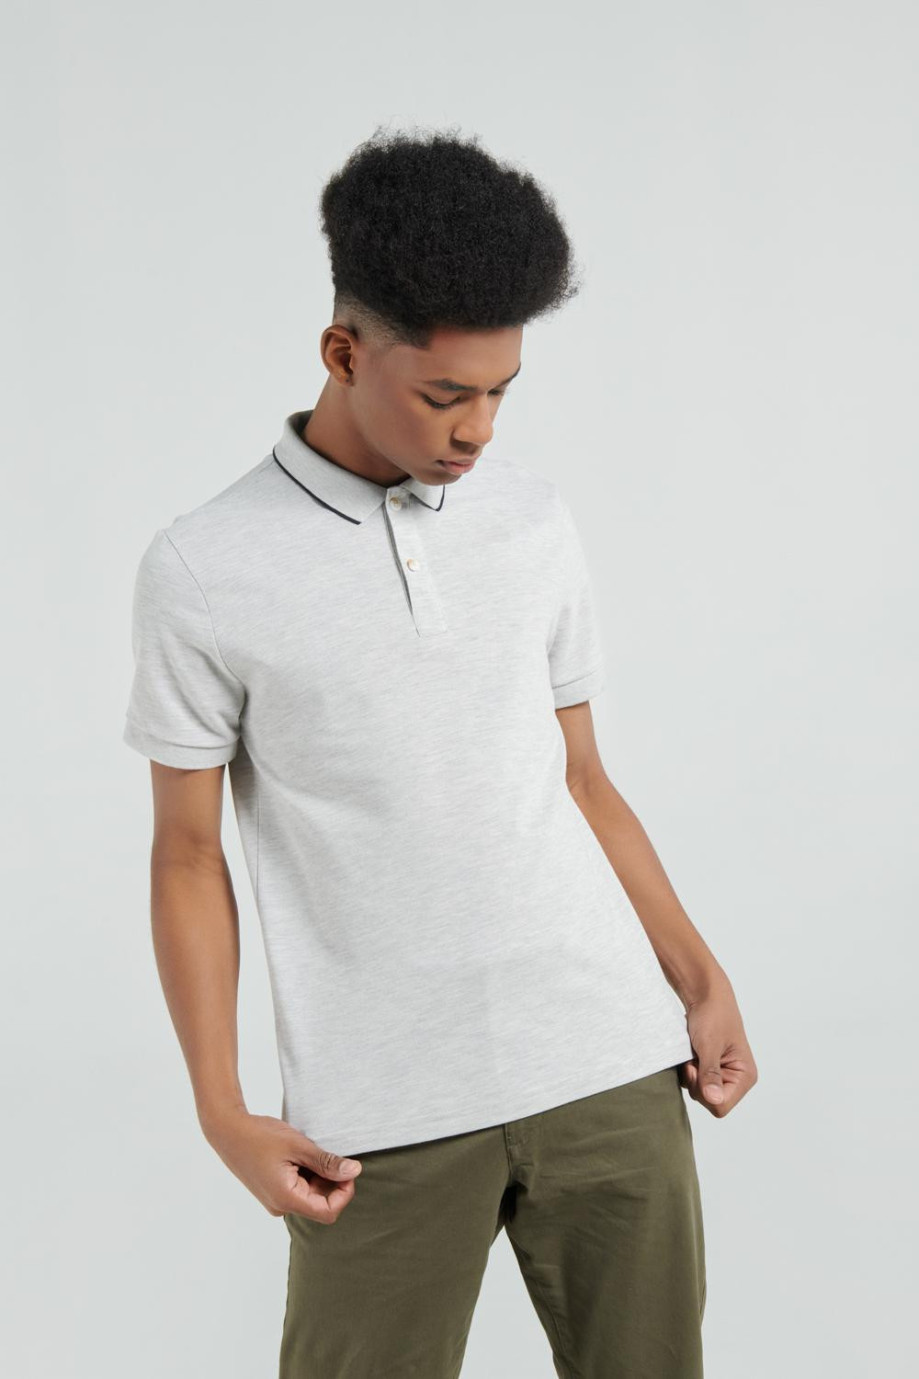 Camiseta gris clara tipo polo con detalles tejidos y manga corta